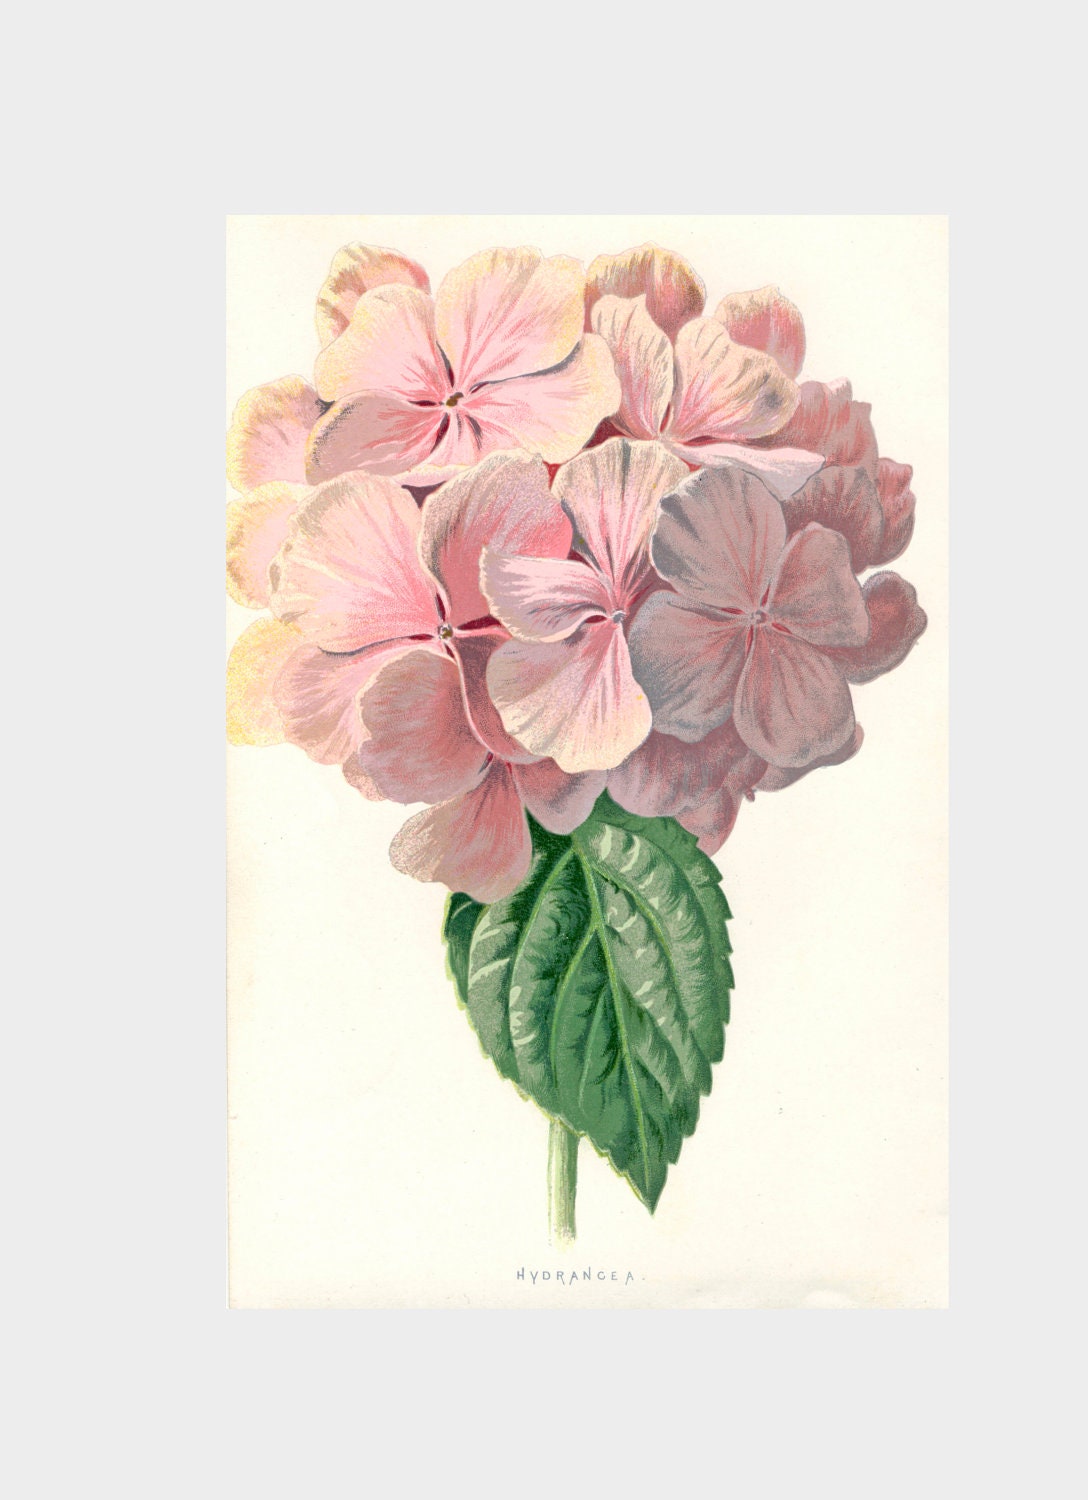 Hydrangea Vintage Botanical Print Flower Book Plate